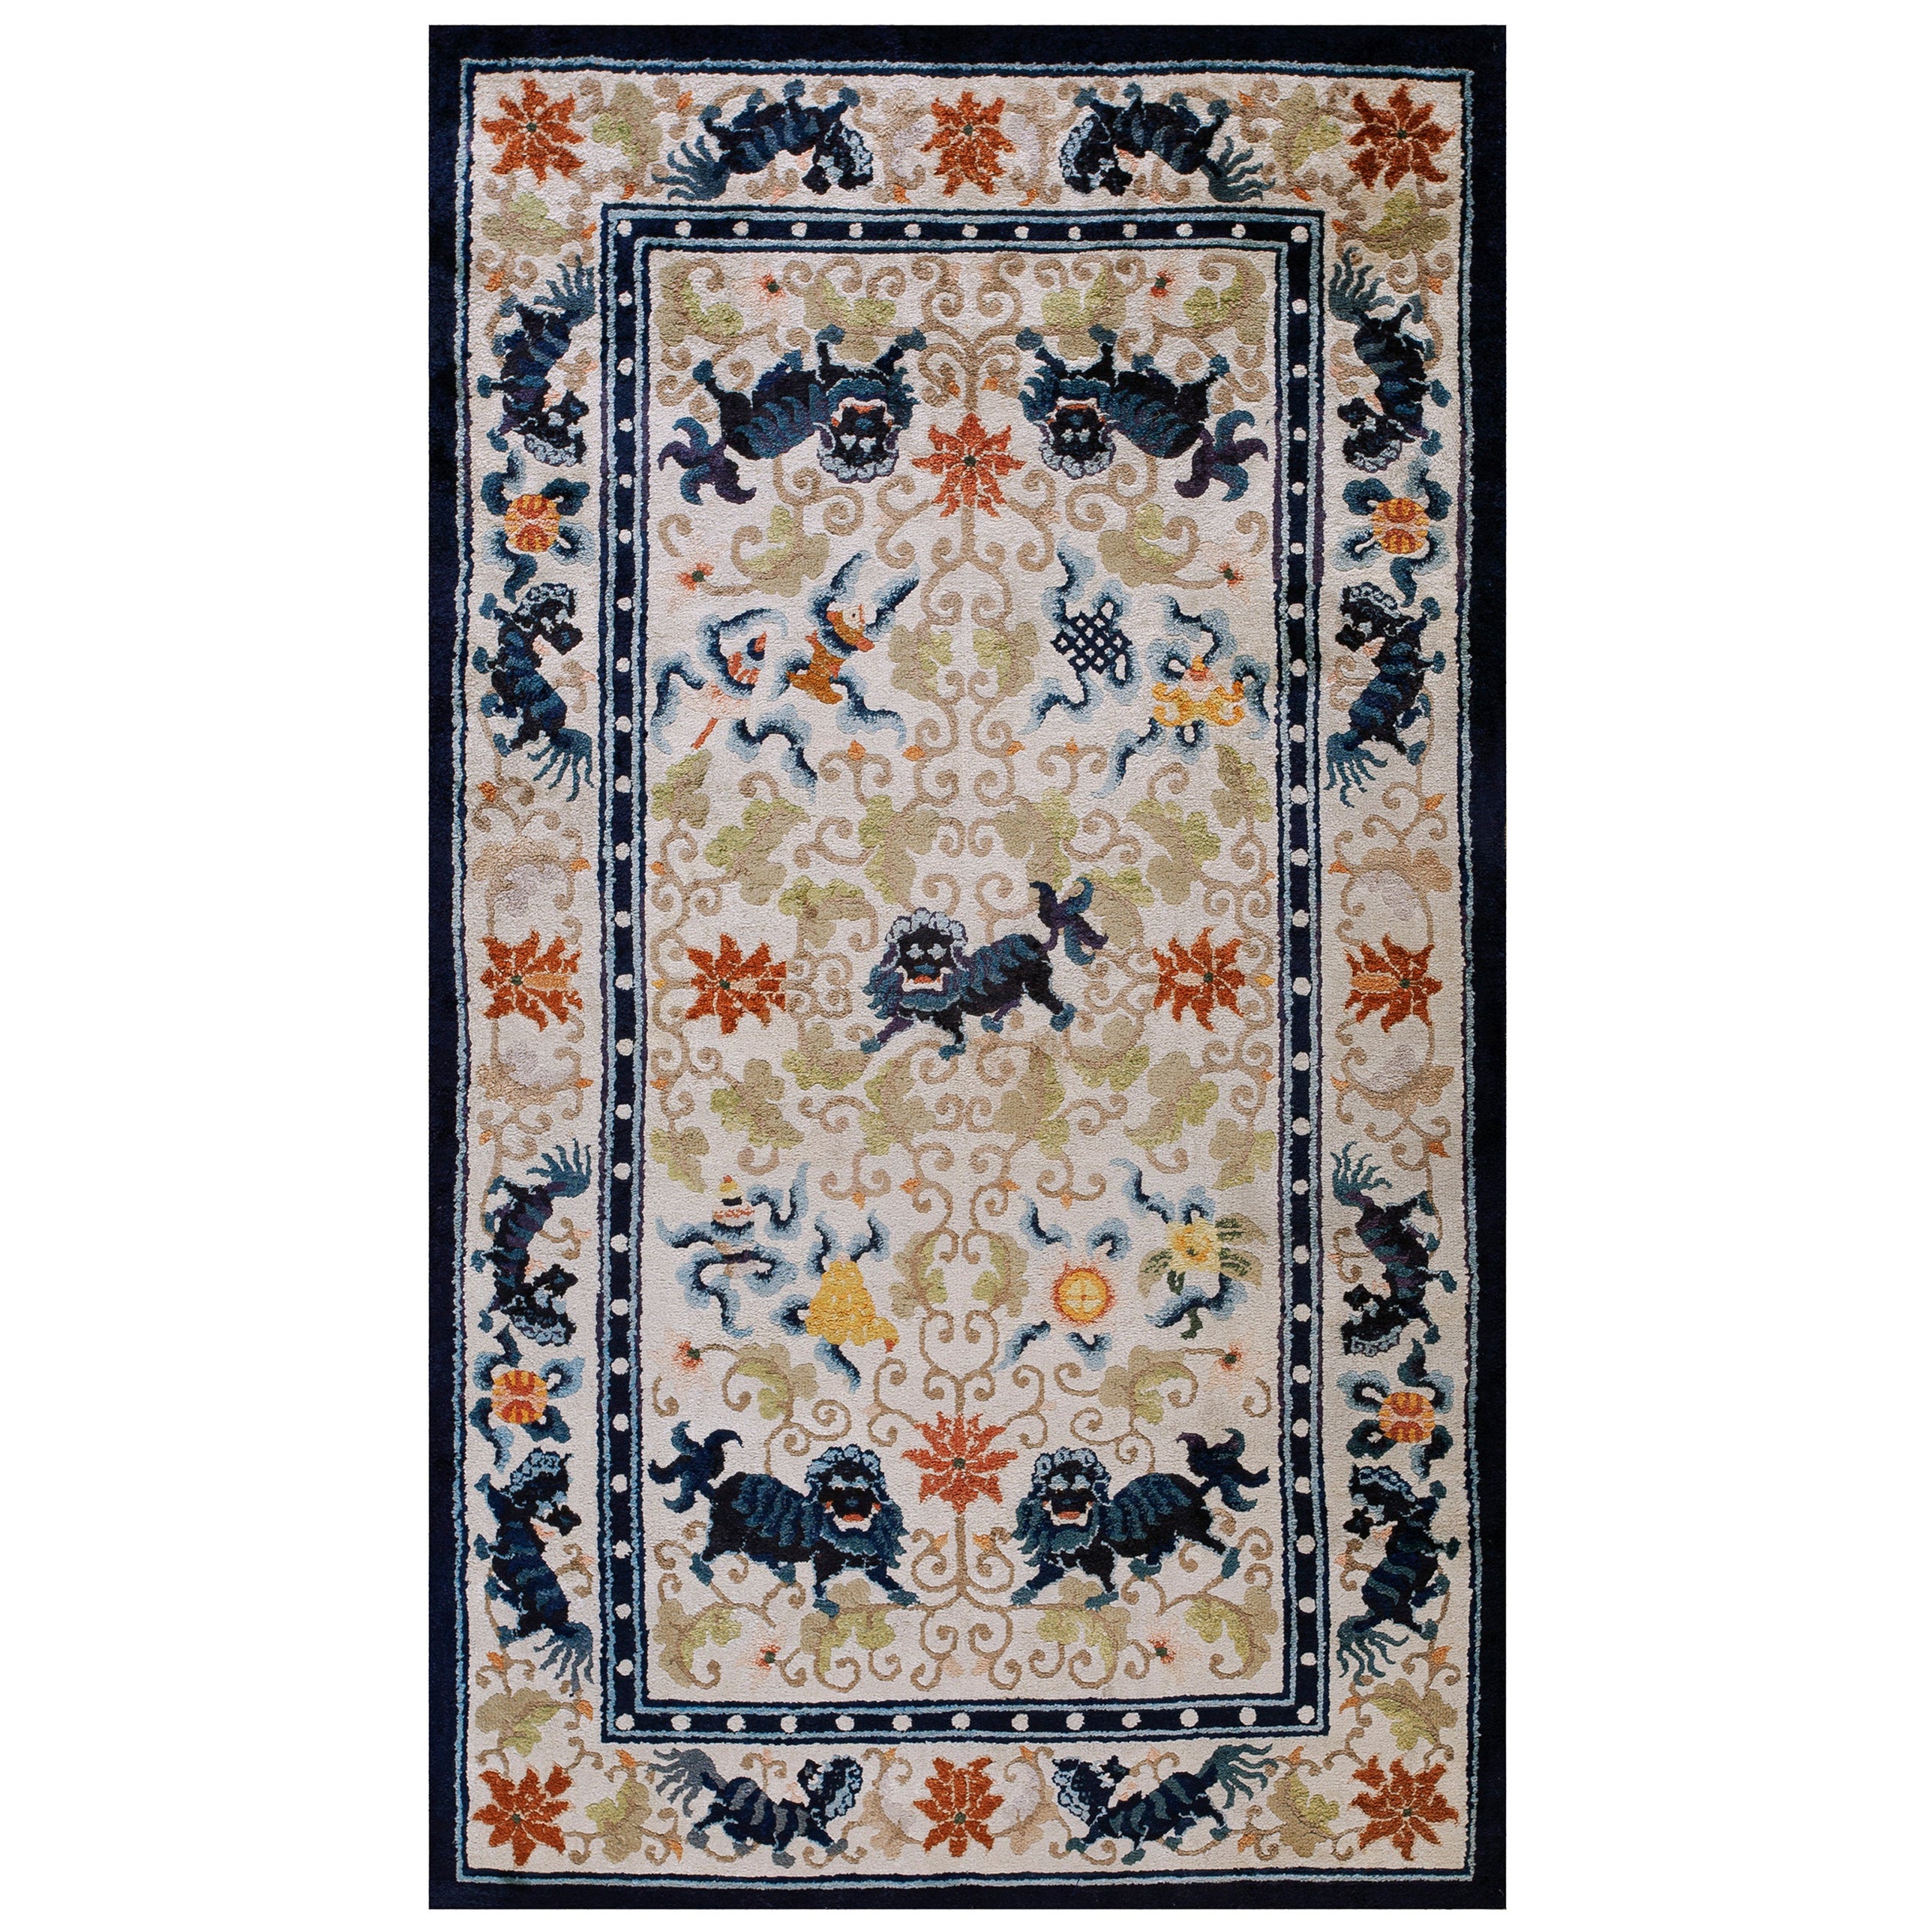 Early 20th Century Chinese Silk Carpet ( 4' x 7' - 122 x 215 cm )